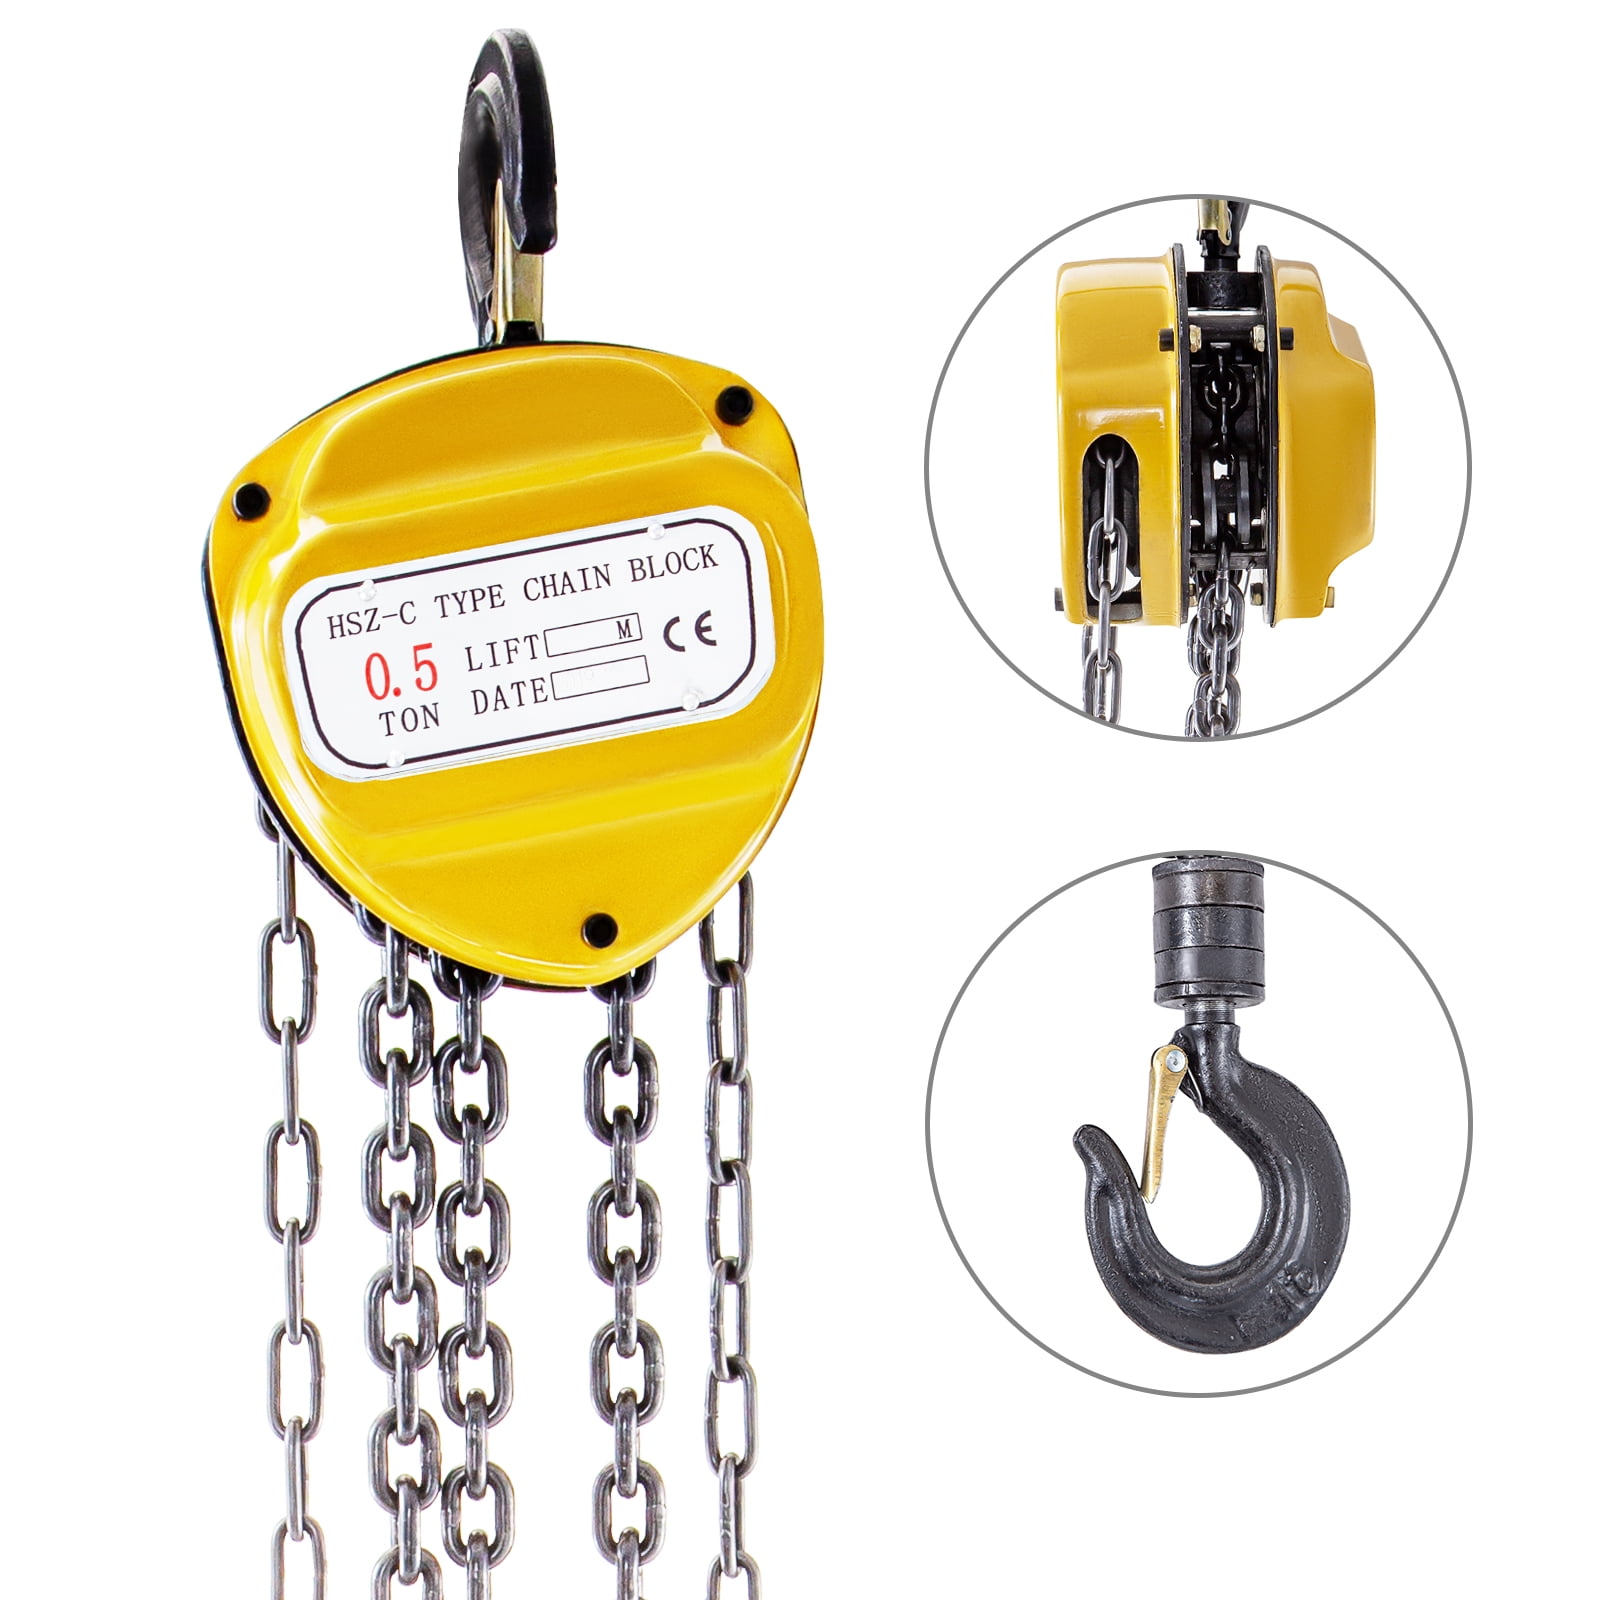 VEVOR Chain Hoist 1100lbs/0.5ton, Chain Block Hoist Manual Chain Hoist  10ft/3m Block Chain Hand Chain Lifting Hoist w/ Two Hooks Chain Pulley  Tackle 